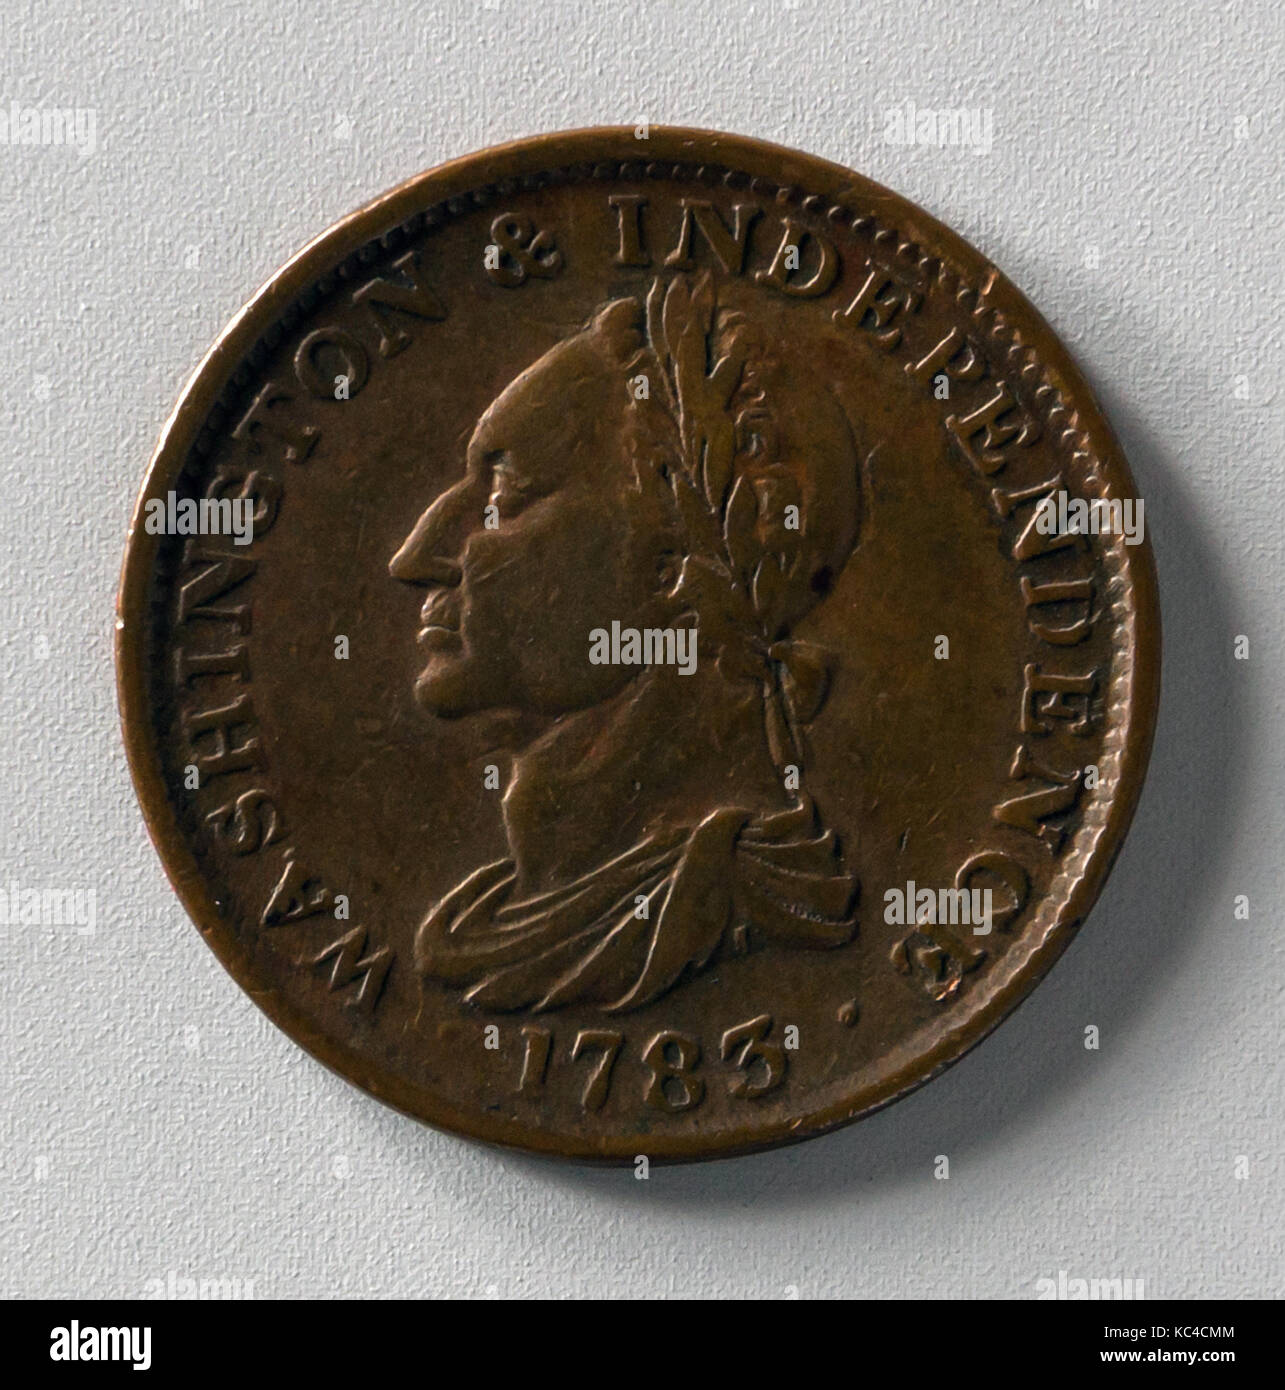 Medal 1783, cobre, diam. 1 1/8 in. (2,9 cm), Metal Foto de stock